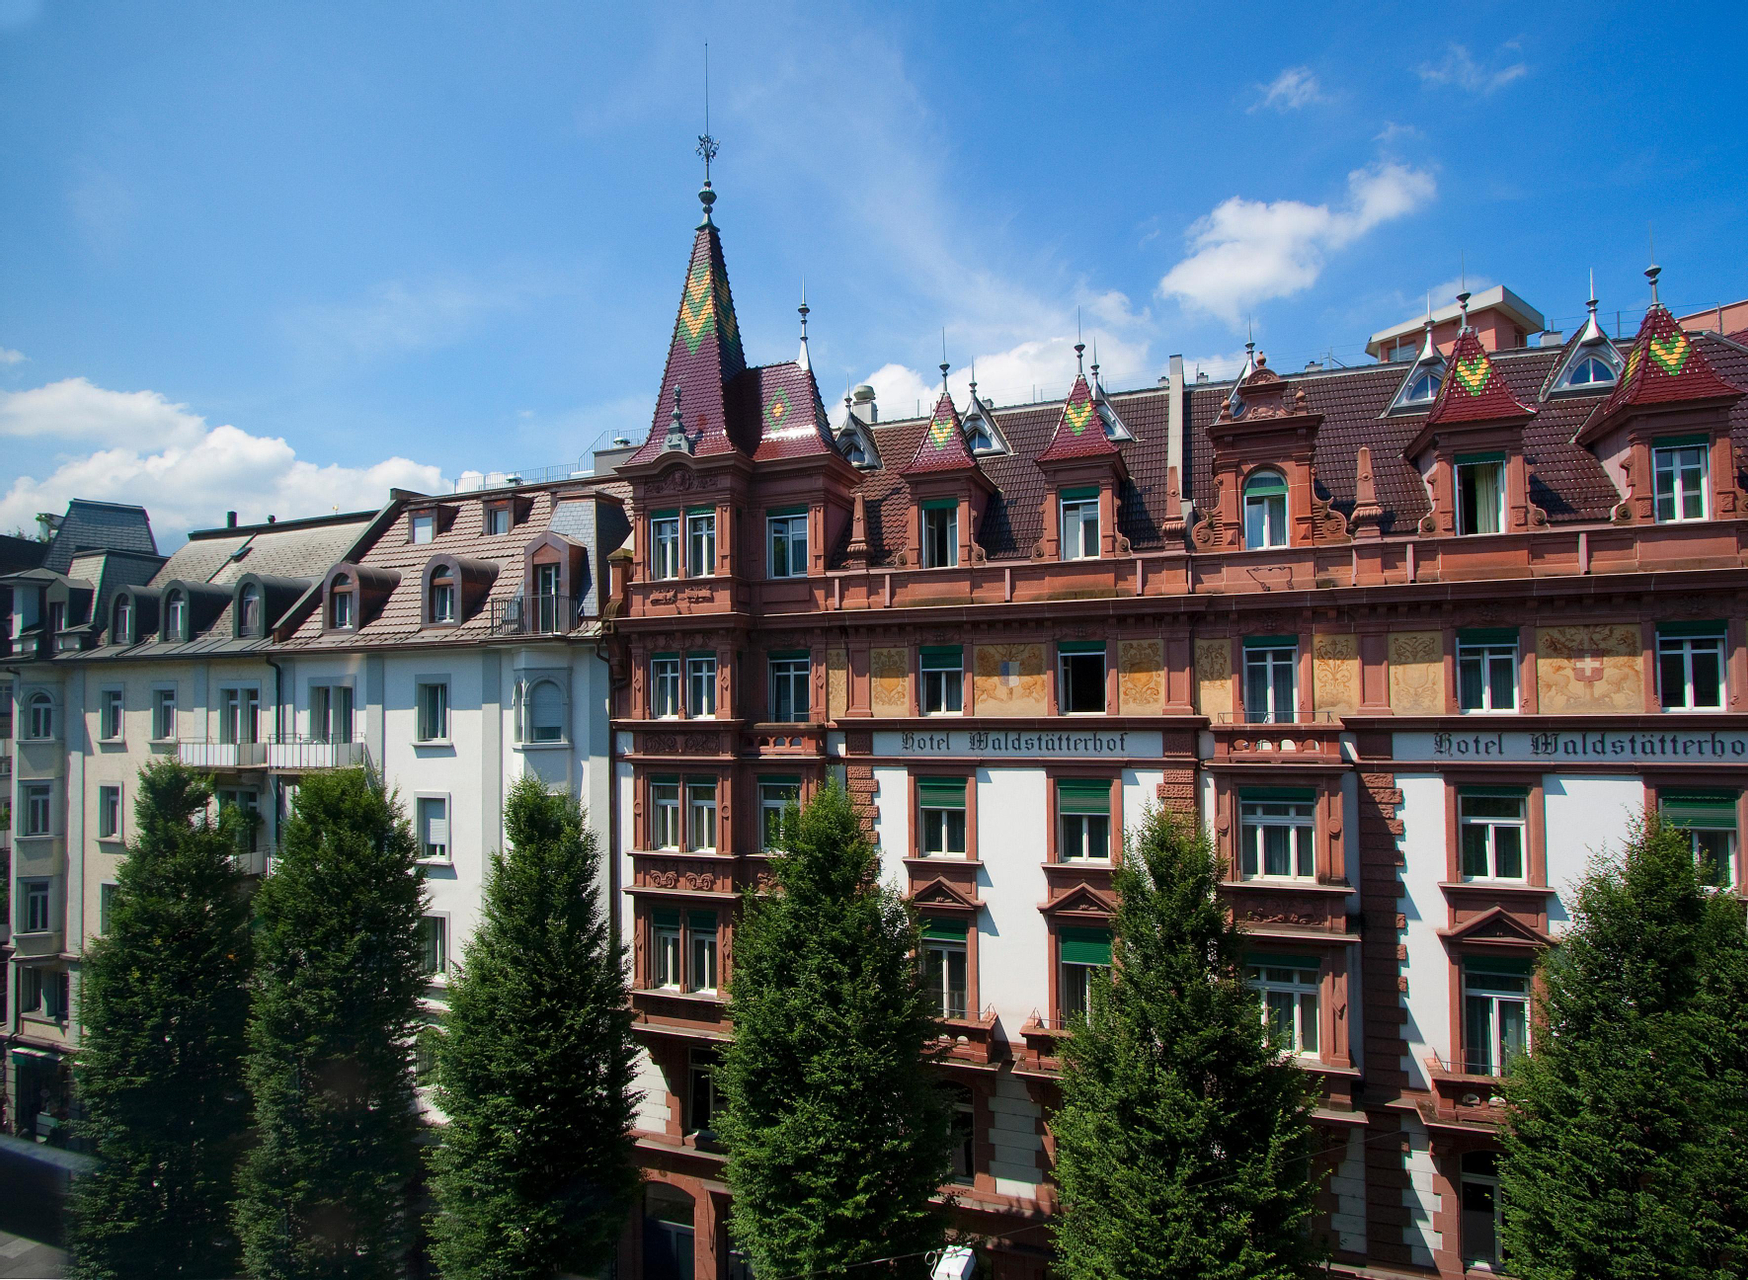 Waldstätterhof Swiss Quality Hotel, Luzern